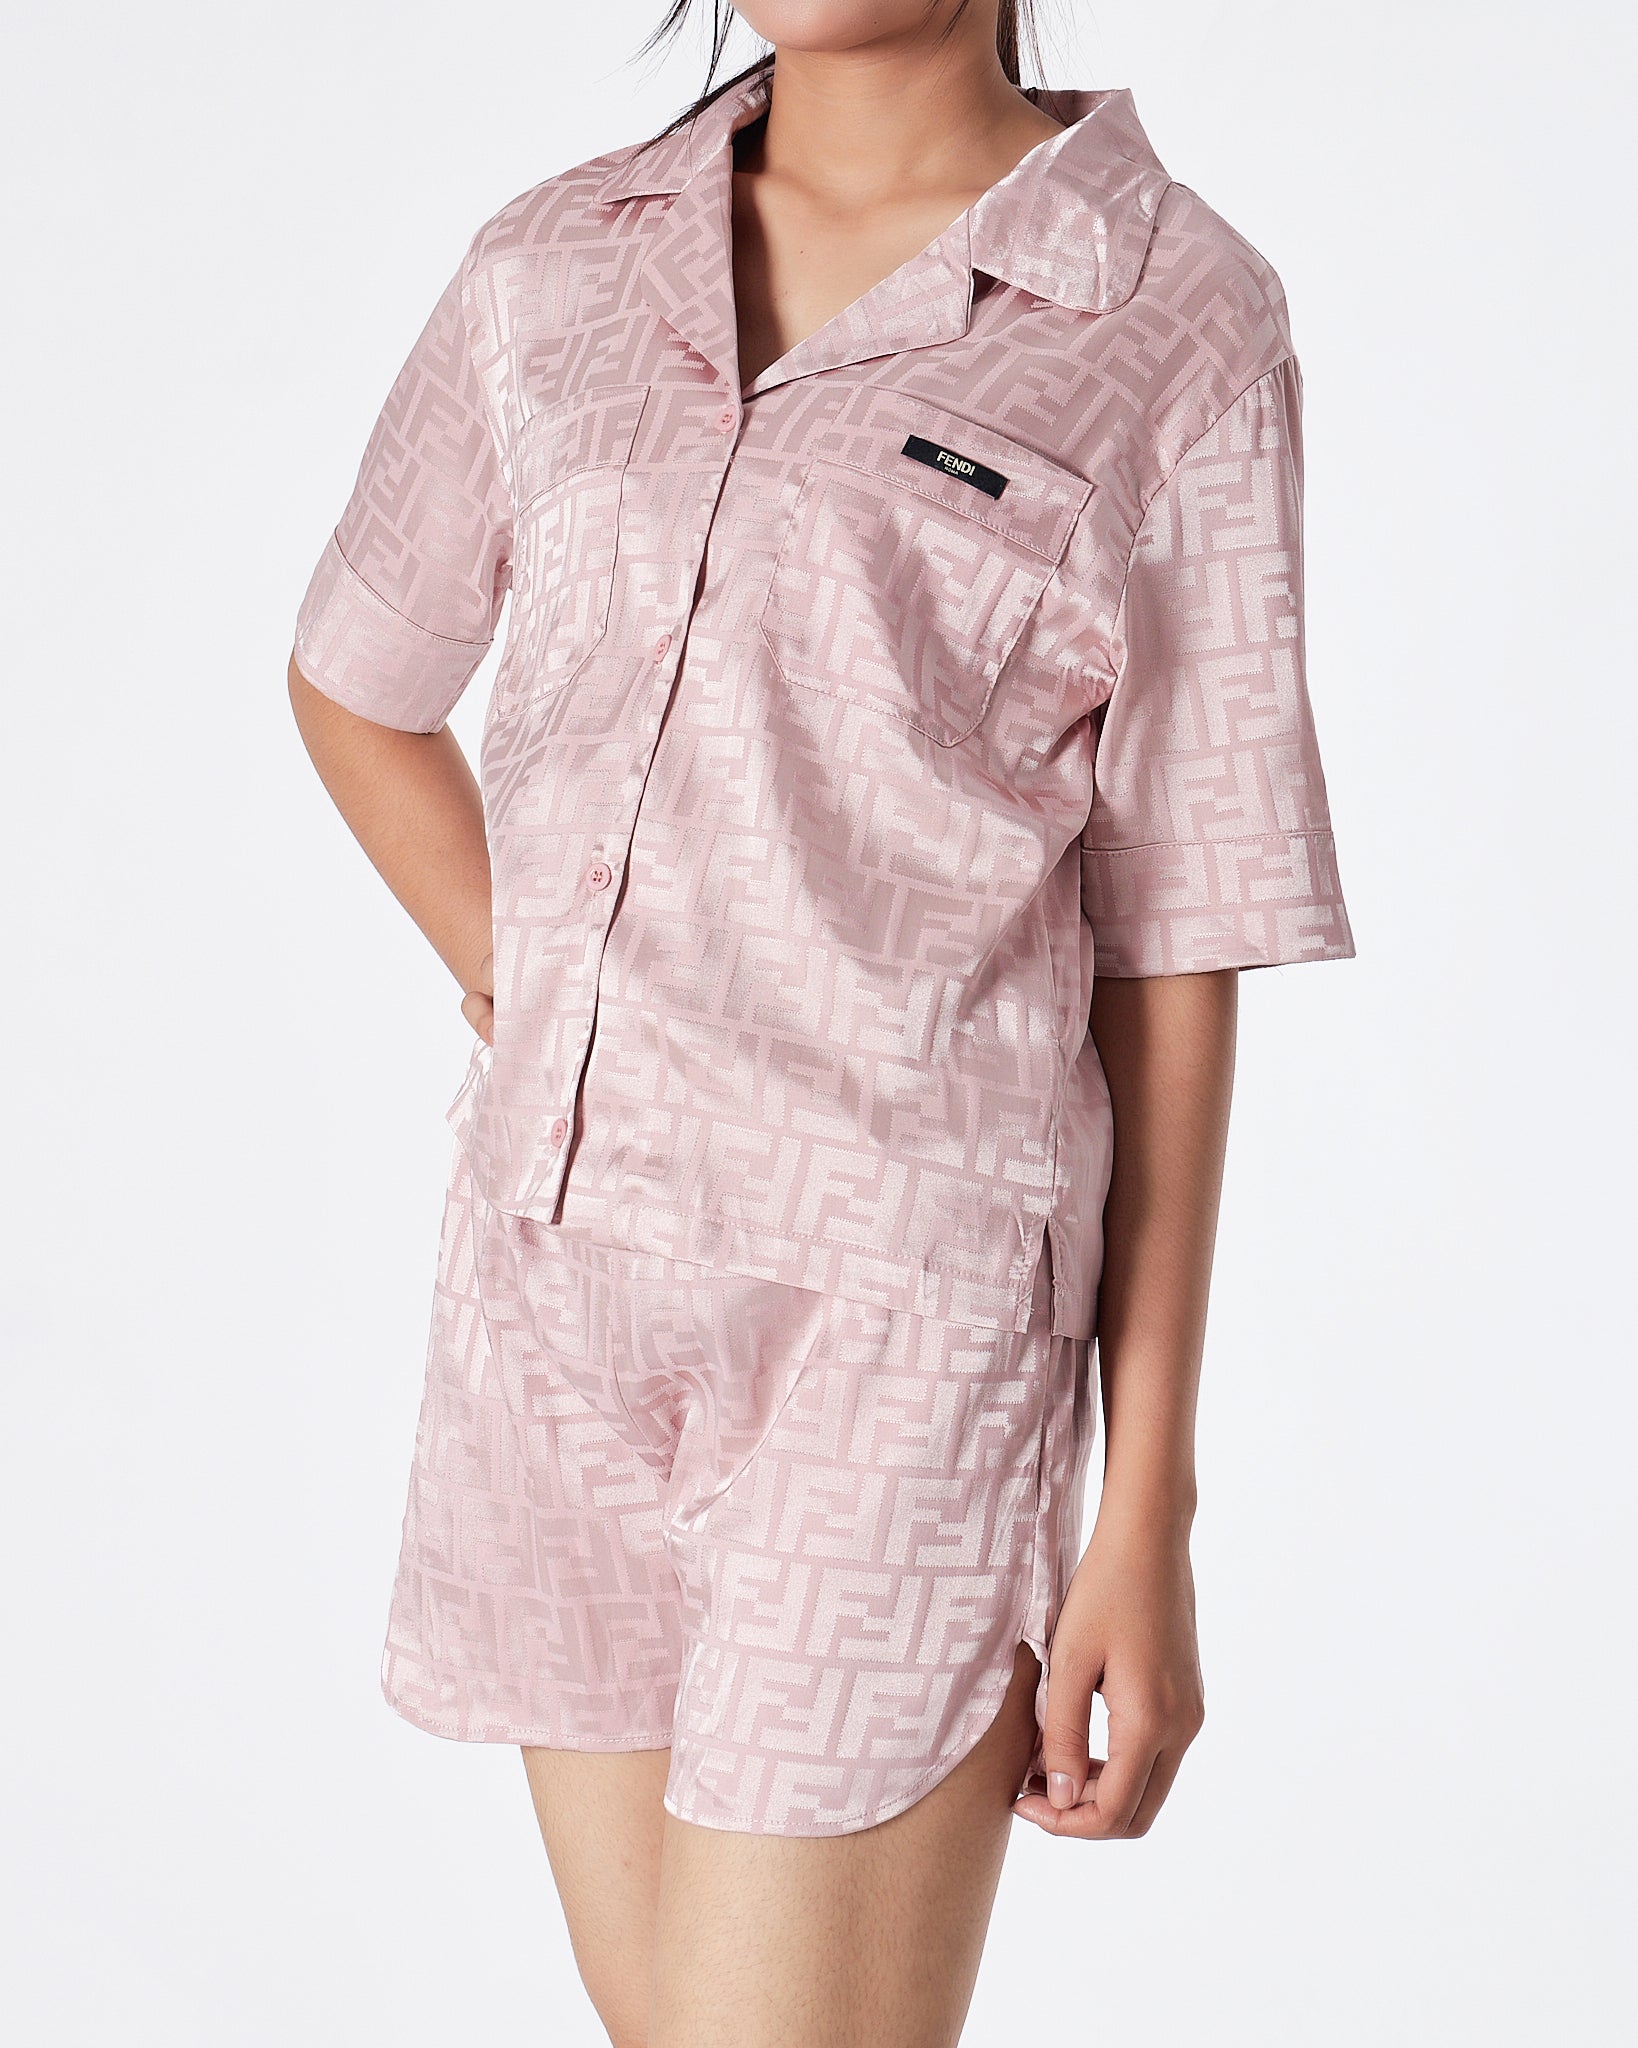 MOI OUTFIT-FF Monogram Lady Pink Set Shirt + Short 2pcs 79.90